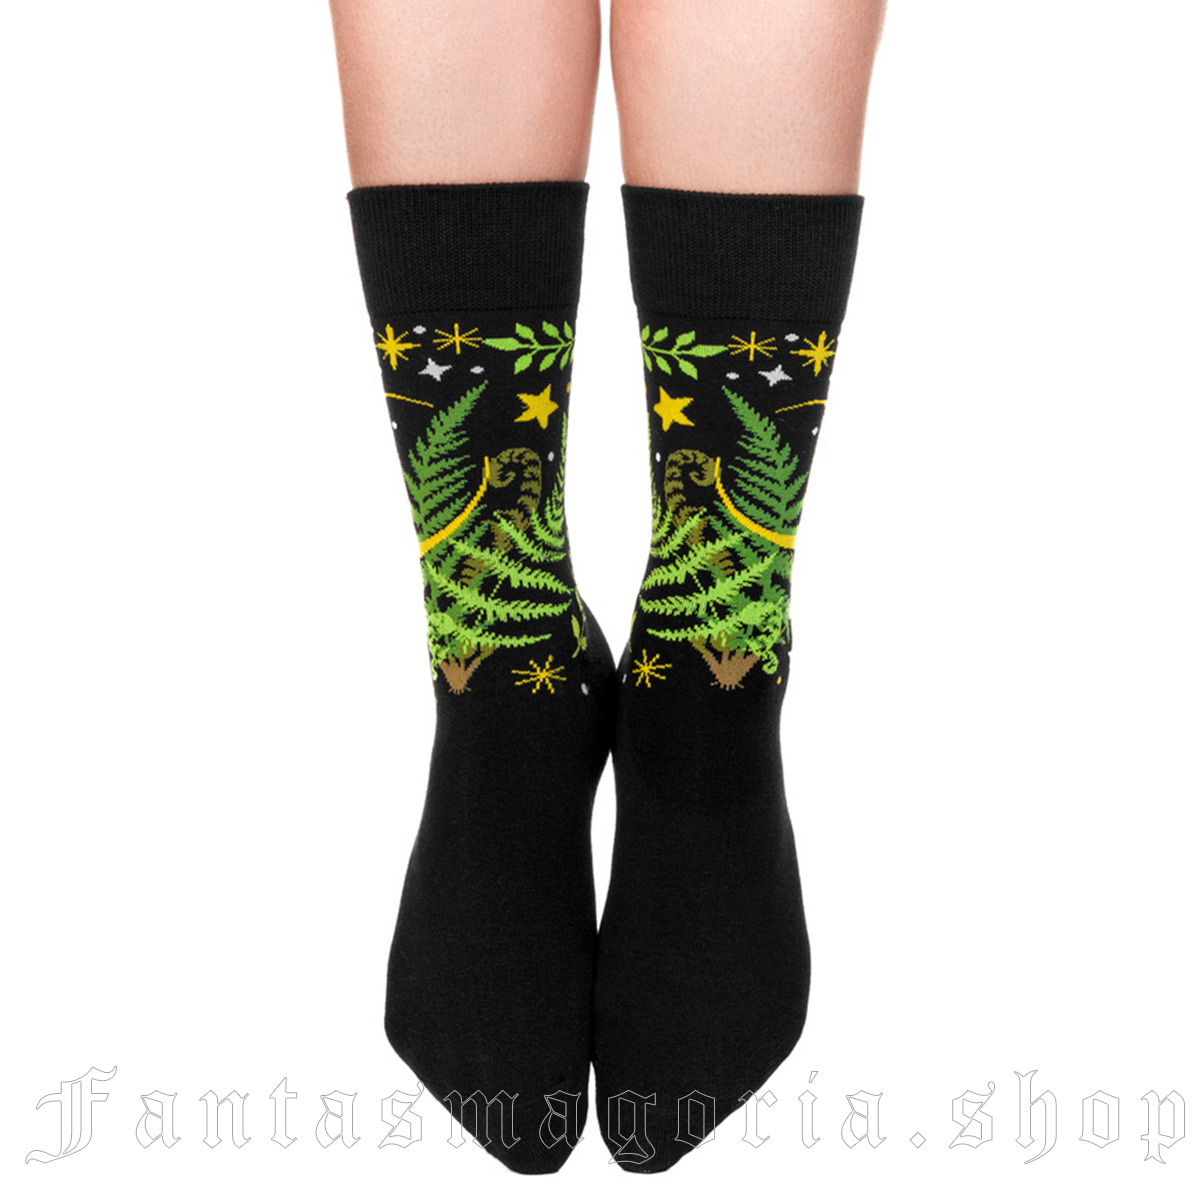 Gothic black fern herbal pattern motif socks. - Restyle - RES5900949917672